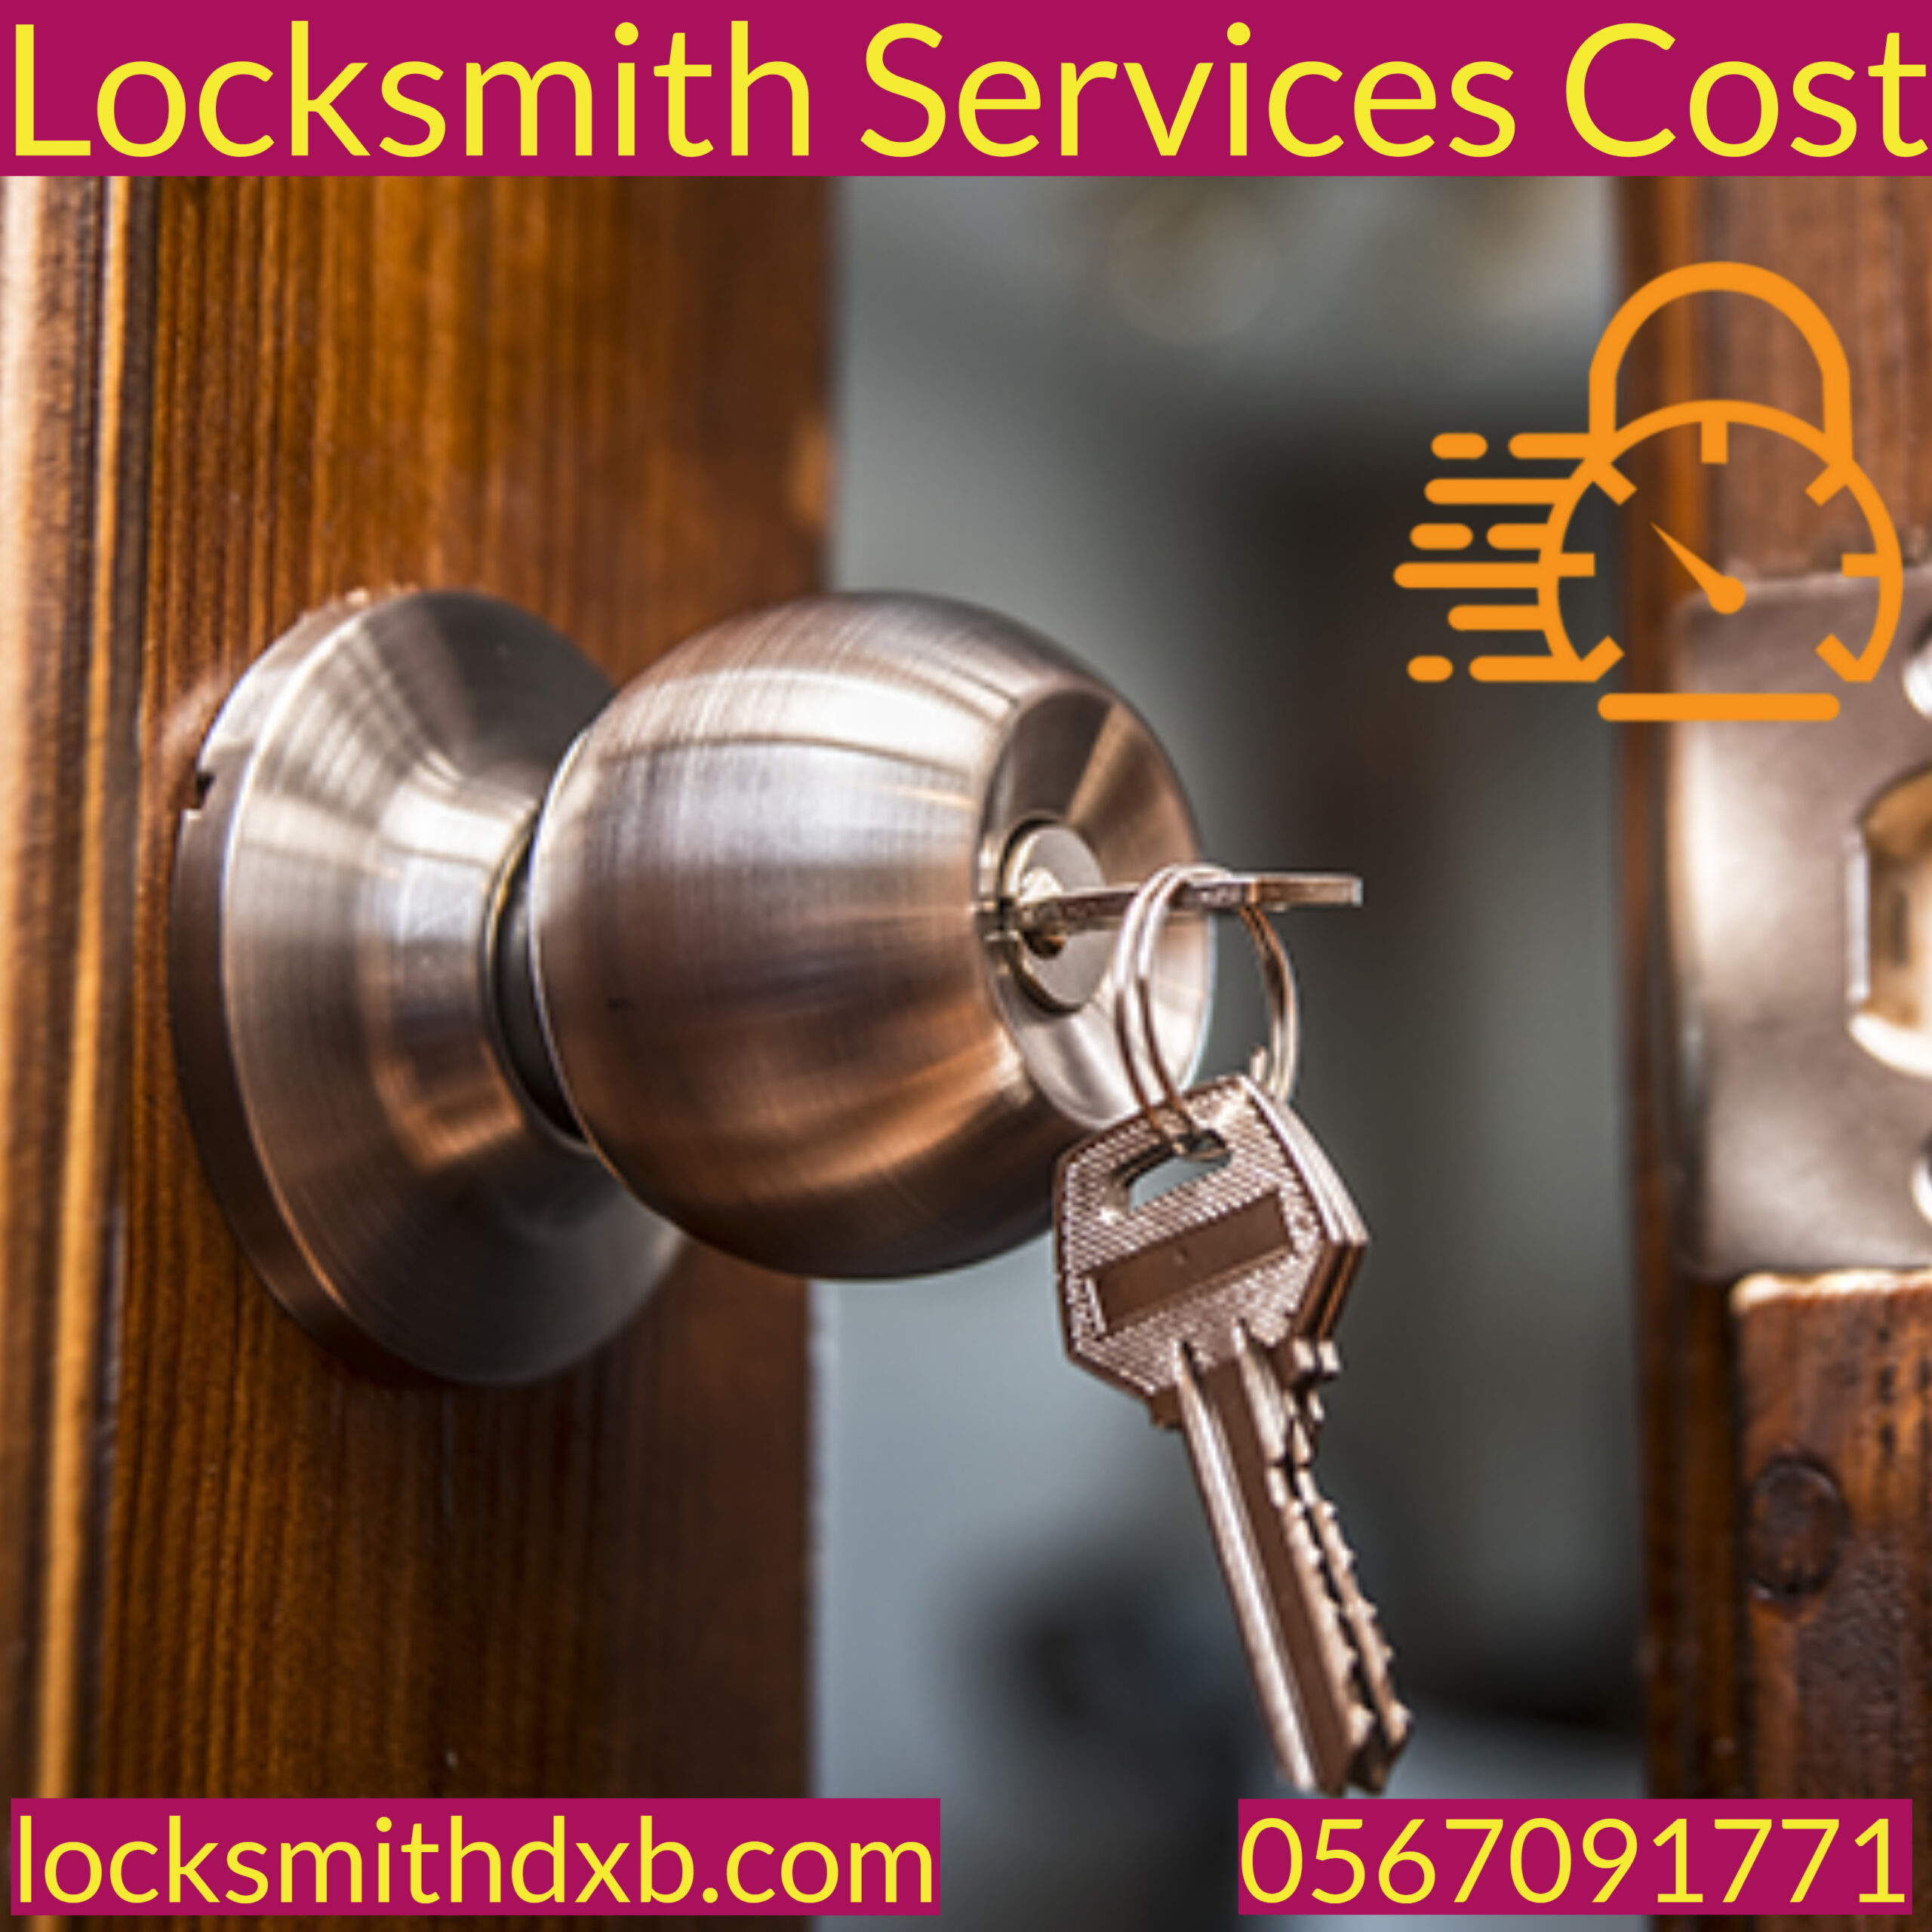 Locksmith Services Cost